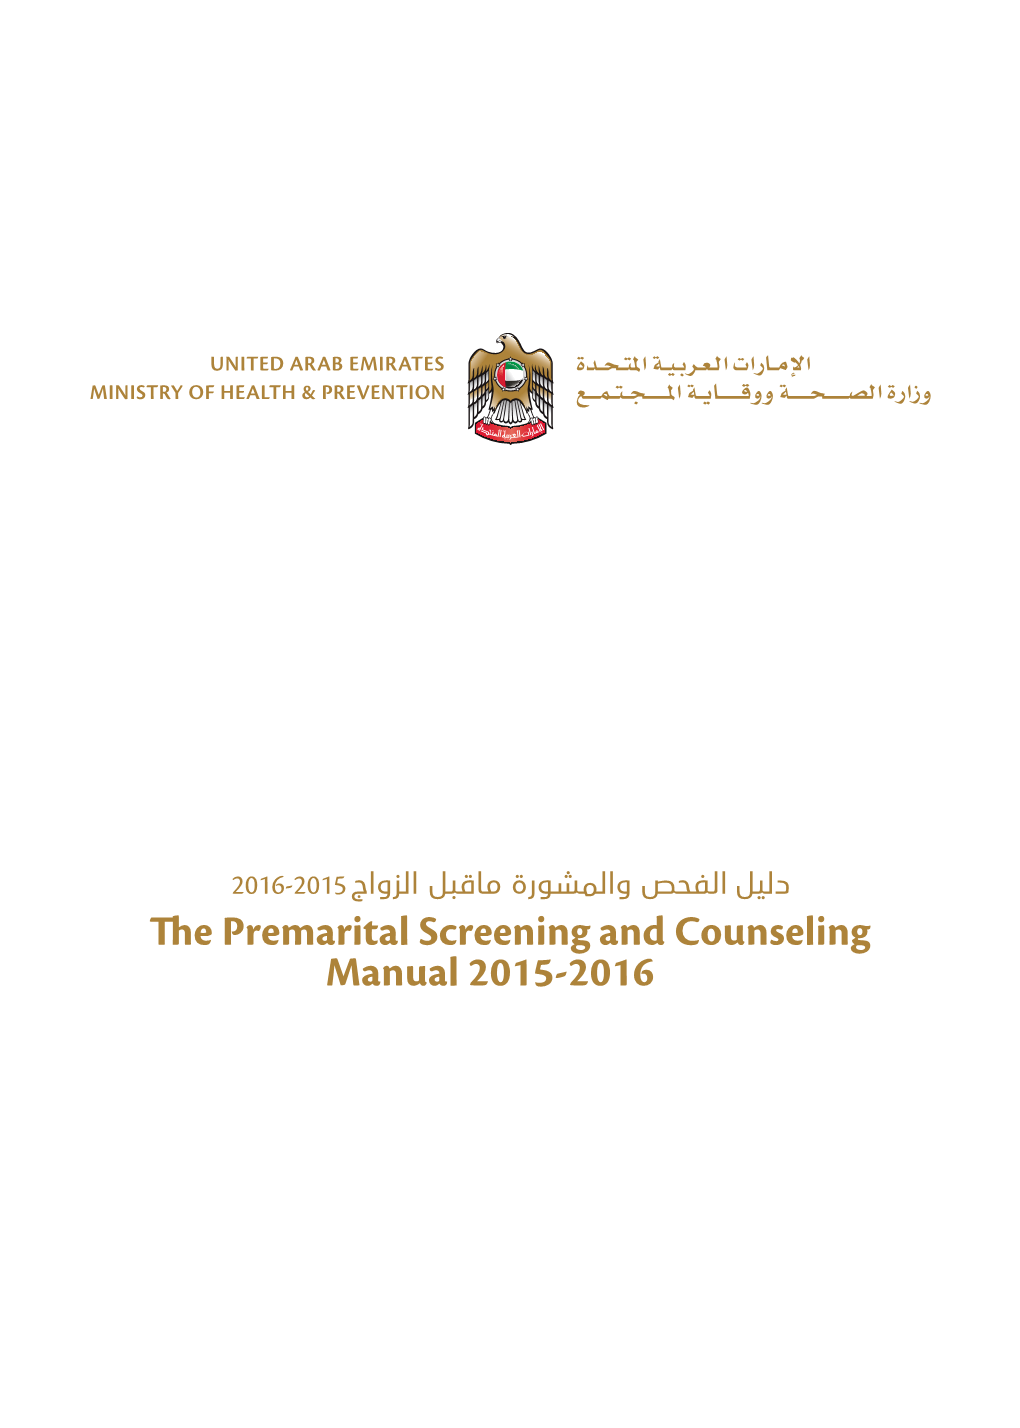 Manual 2015-2016 Editors: 1